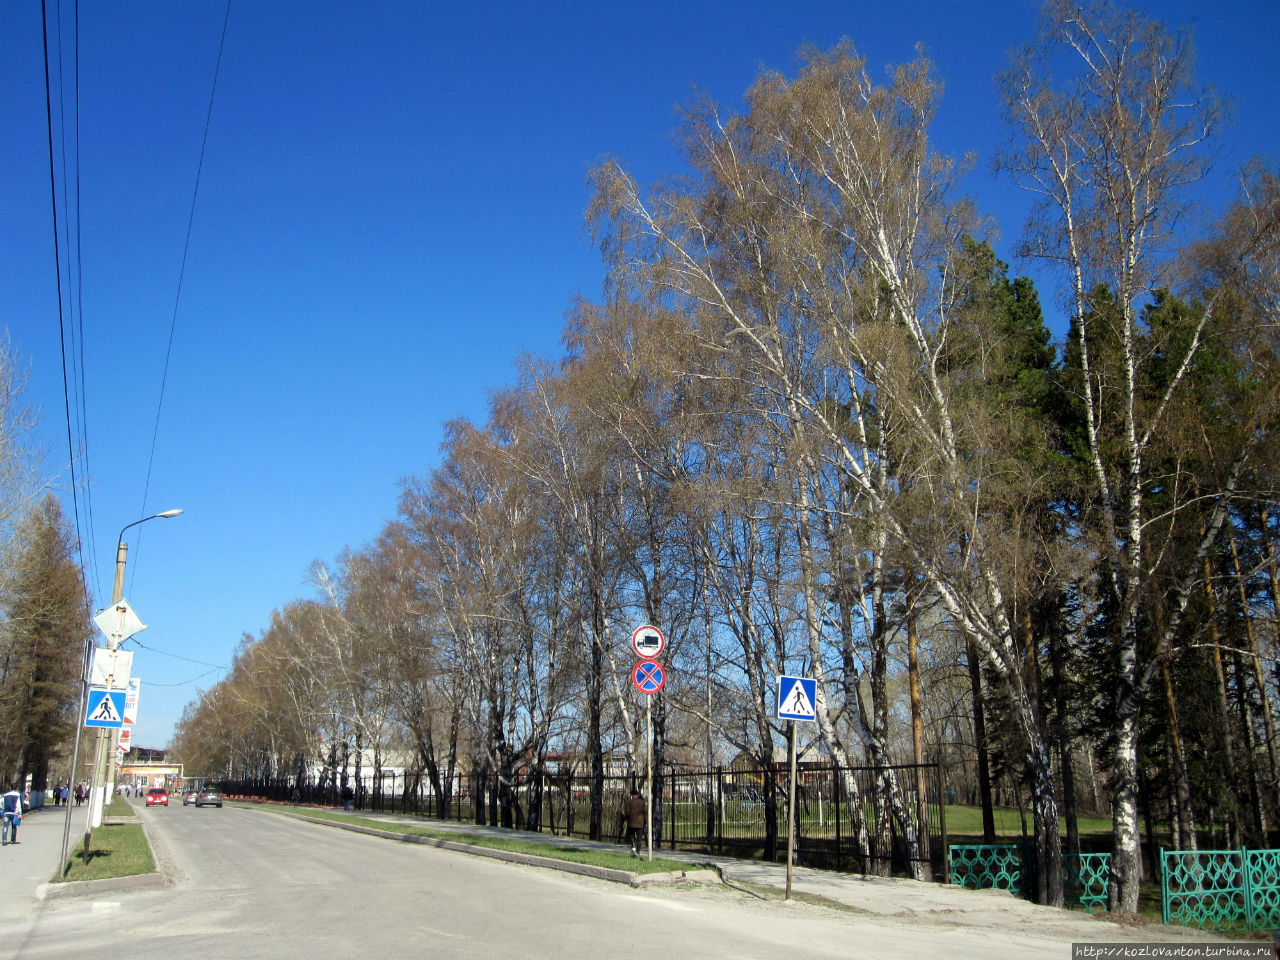 На ул.Суворова за березами справа виднеется стадион Цементник. Яшкино, Россия